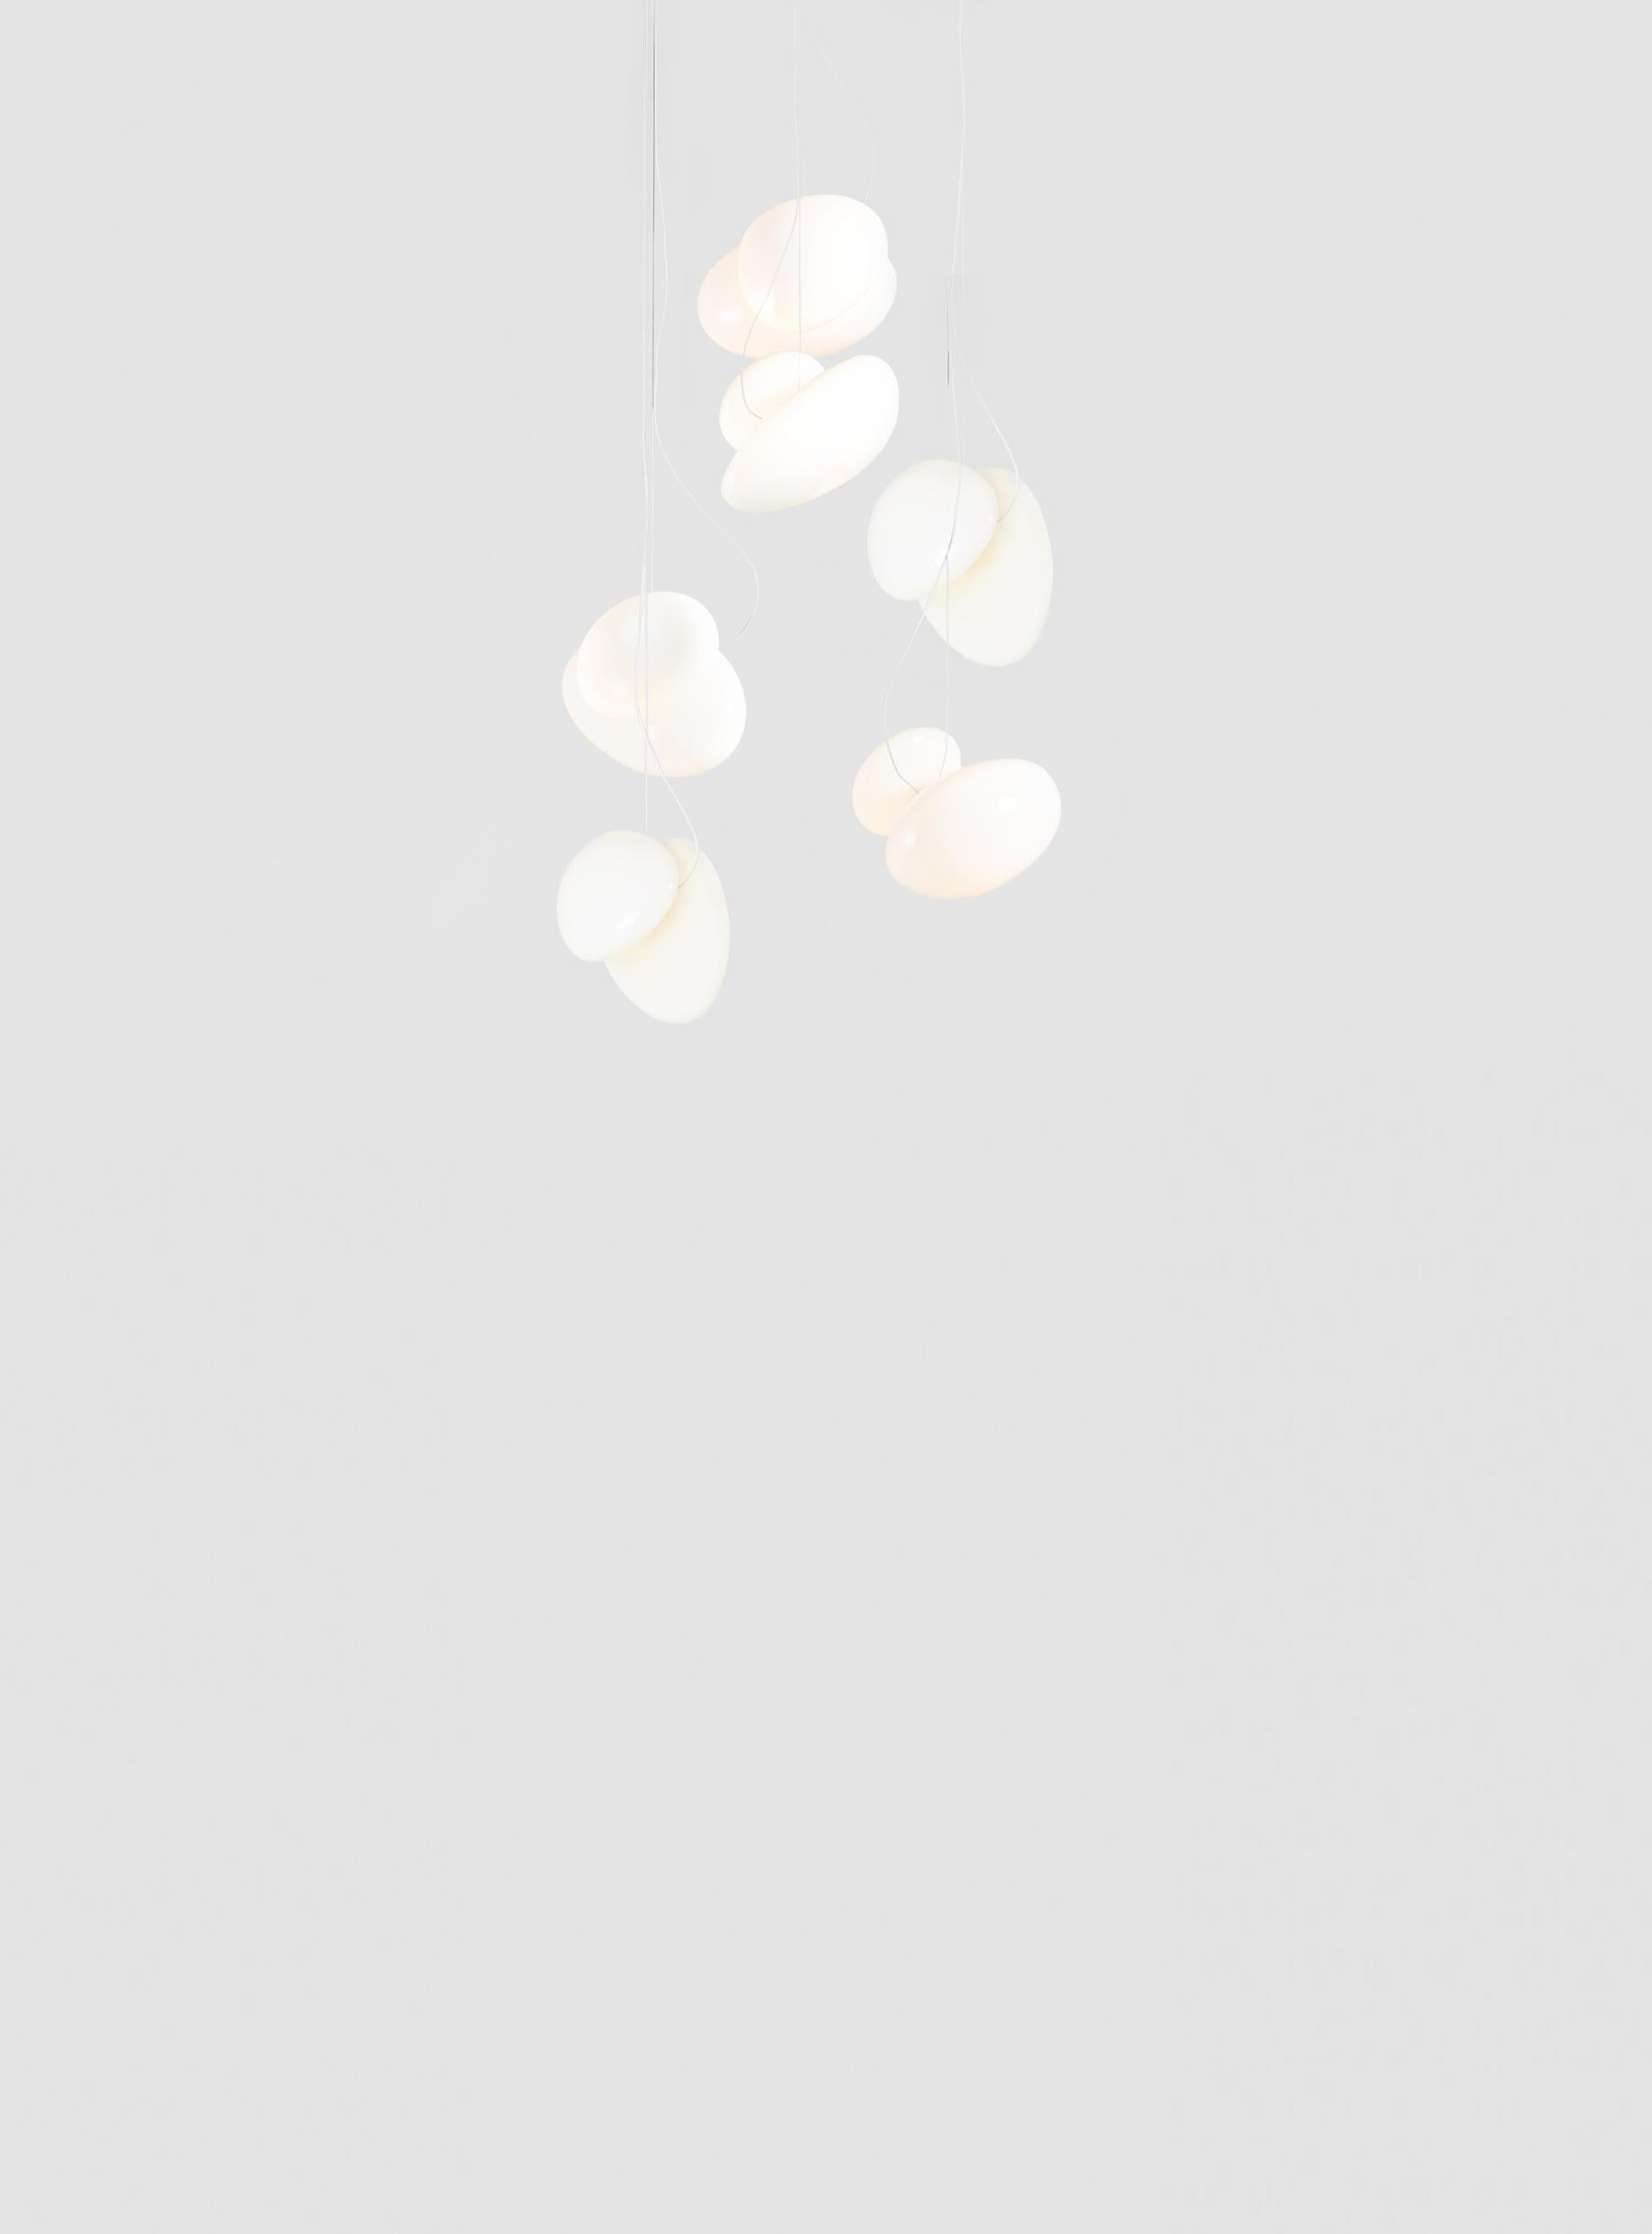 Contemporary chandelier Pebble 
Drop type: Double Helix 

Electrical : 
Voltage: 110 – 277V / 220 – 240V
Integral LED source : 3 x 14W LED 39V

The model shown in picture:
Each pendant: Ø 35cm, 5kg
Canopy: Ø 69cm, 11kg
Color: White